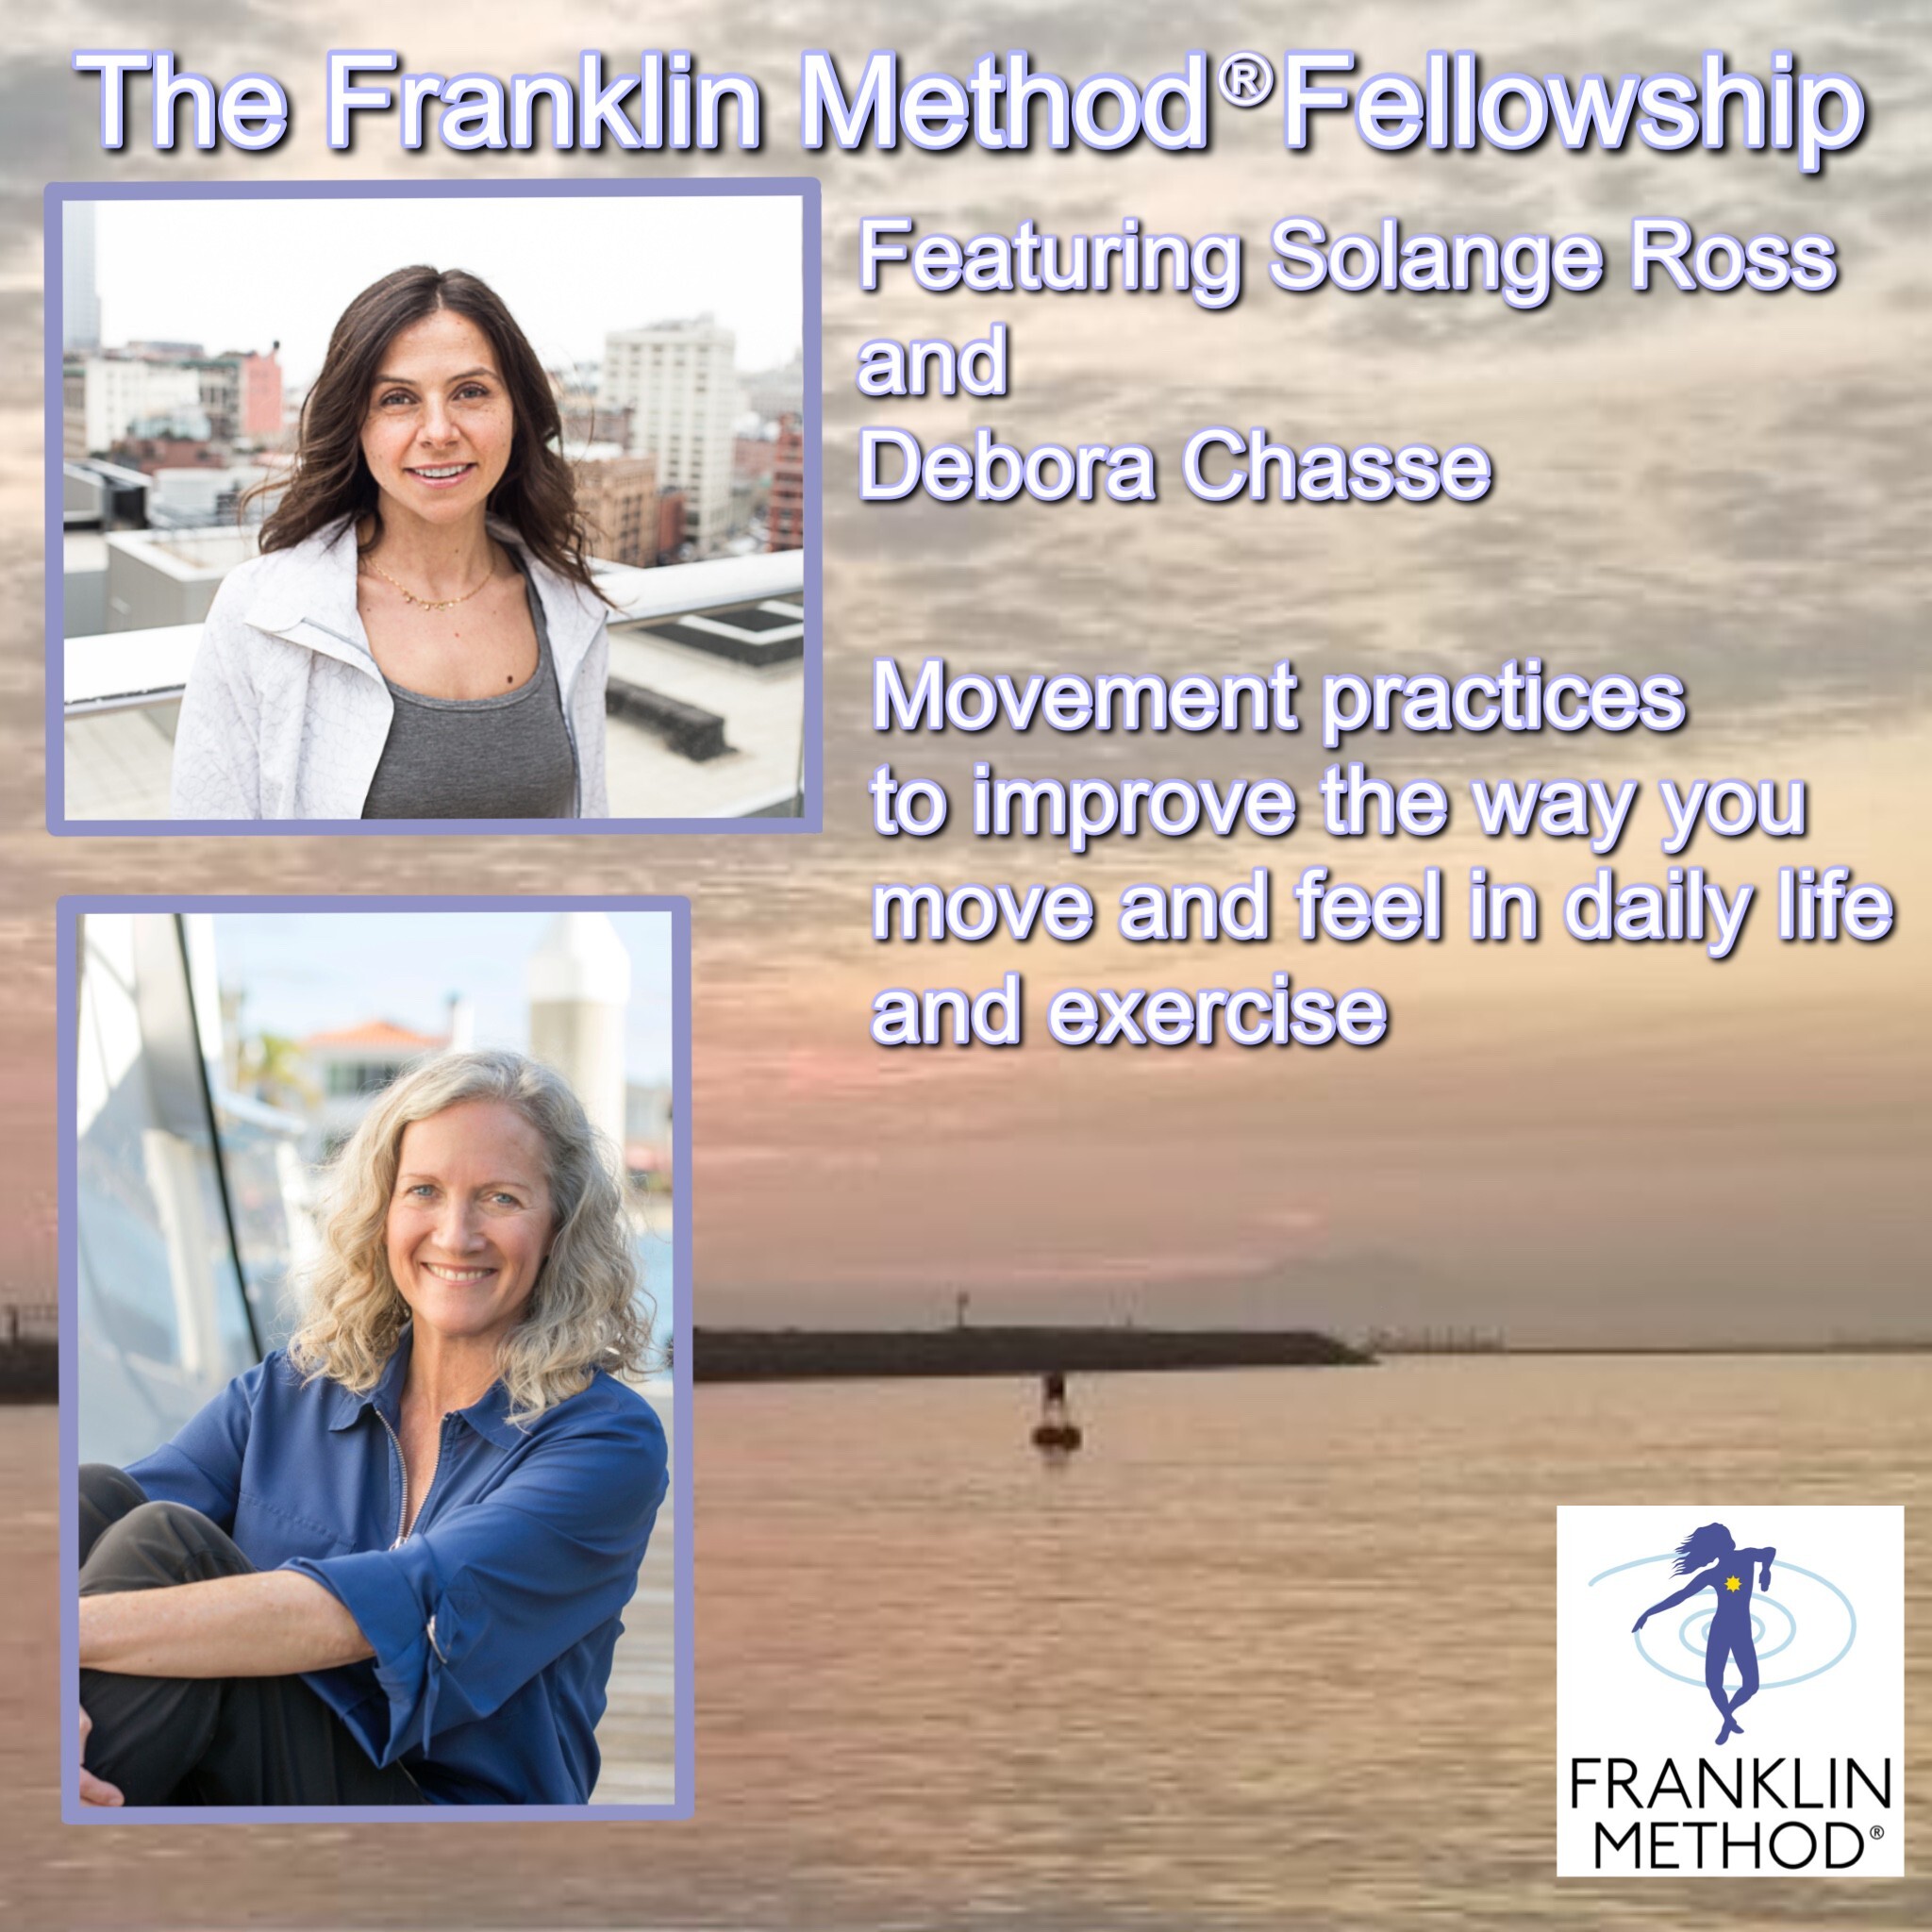 Franklin Method Fellowship